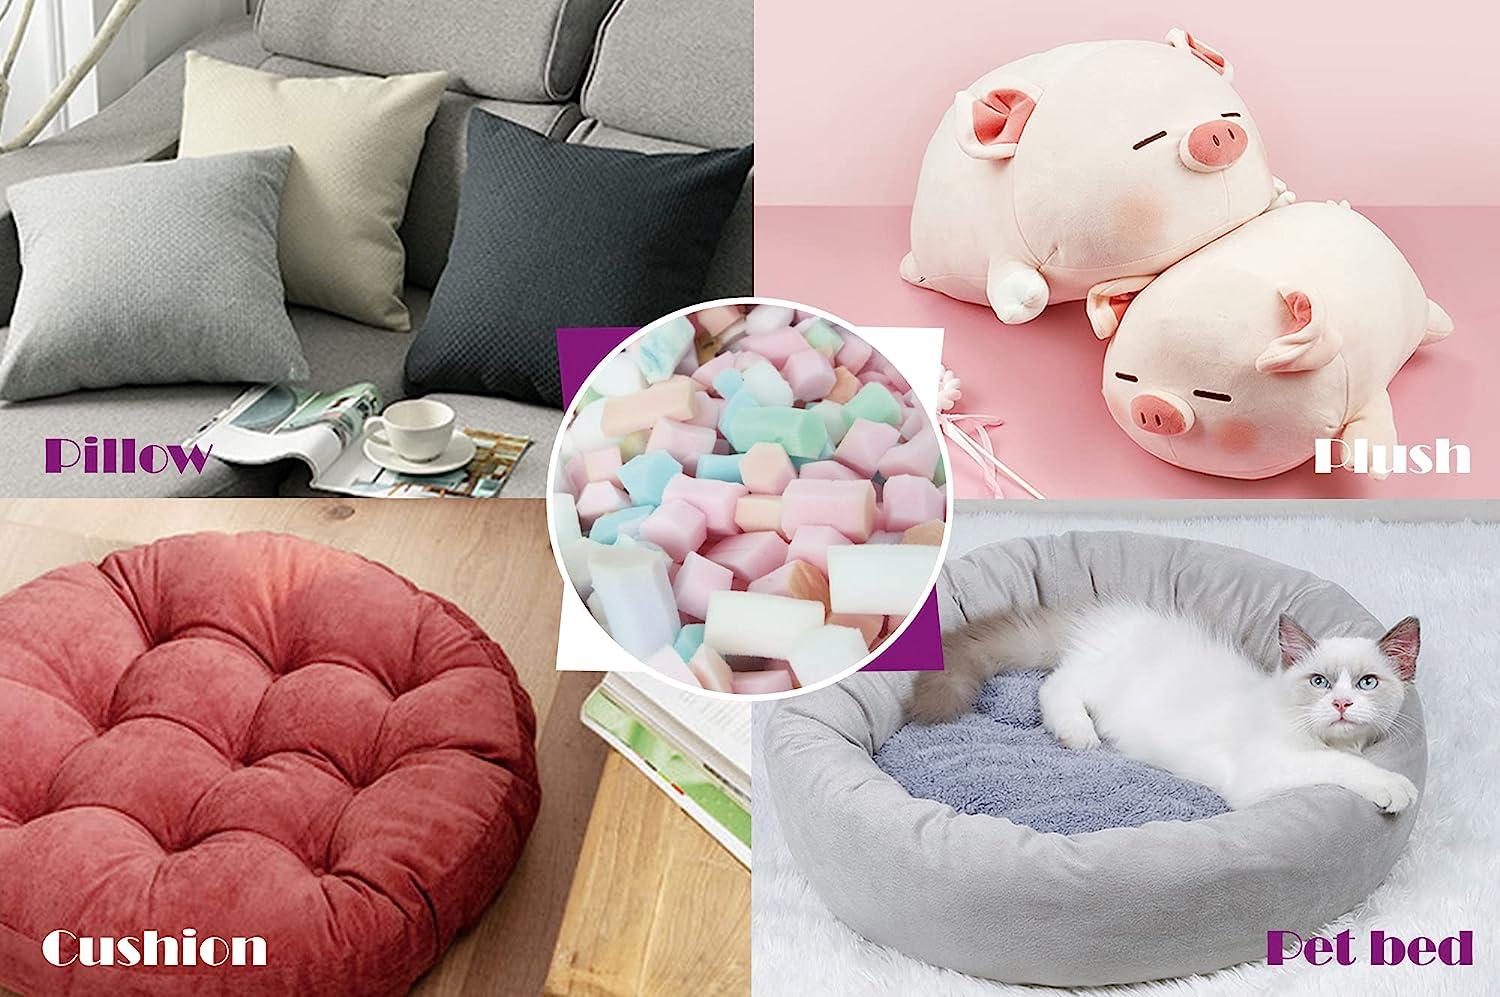 Shredded Memory Foam Fill Refill for Pillow, Bean Bag, Dog Pet Bed Cushion  20lbs